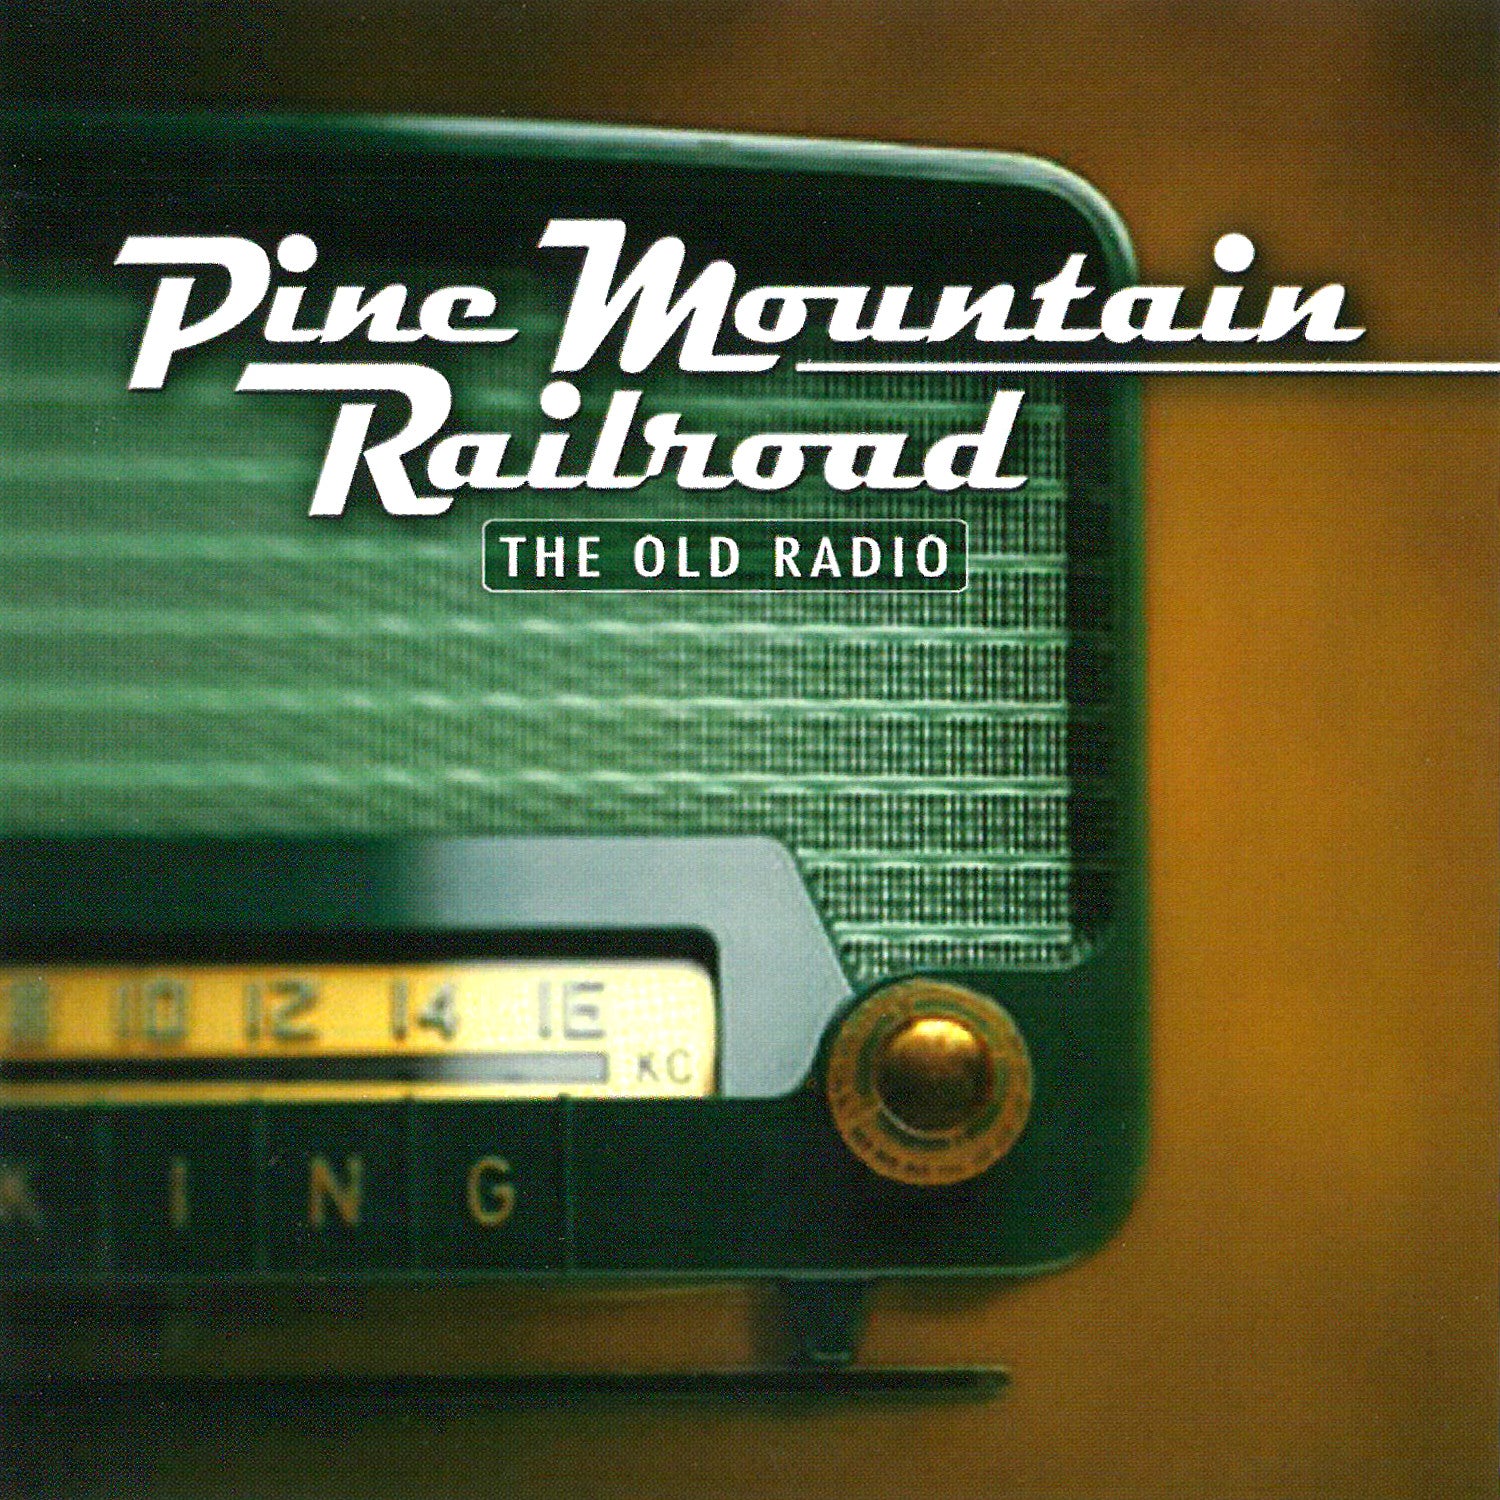 Pine Mountain Railroad: The Old Radio